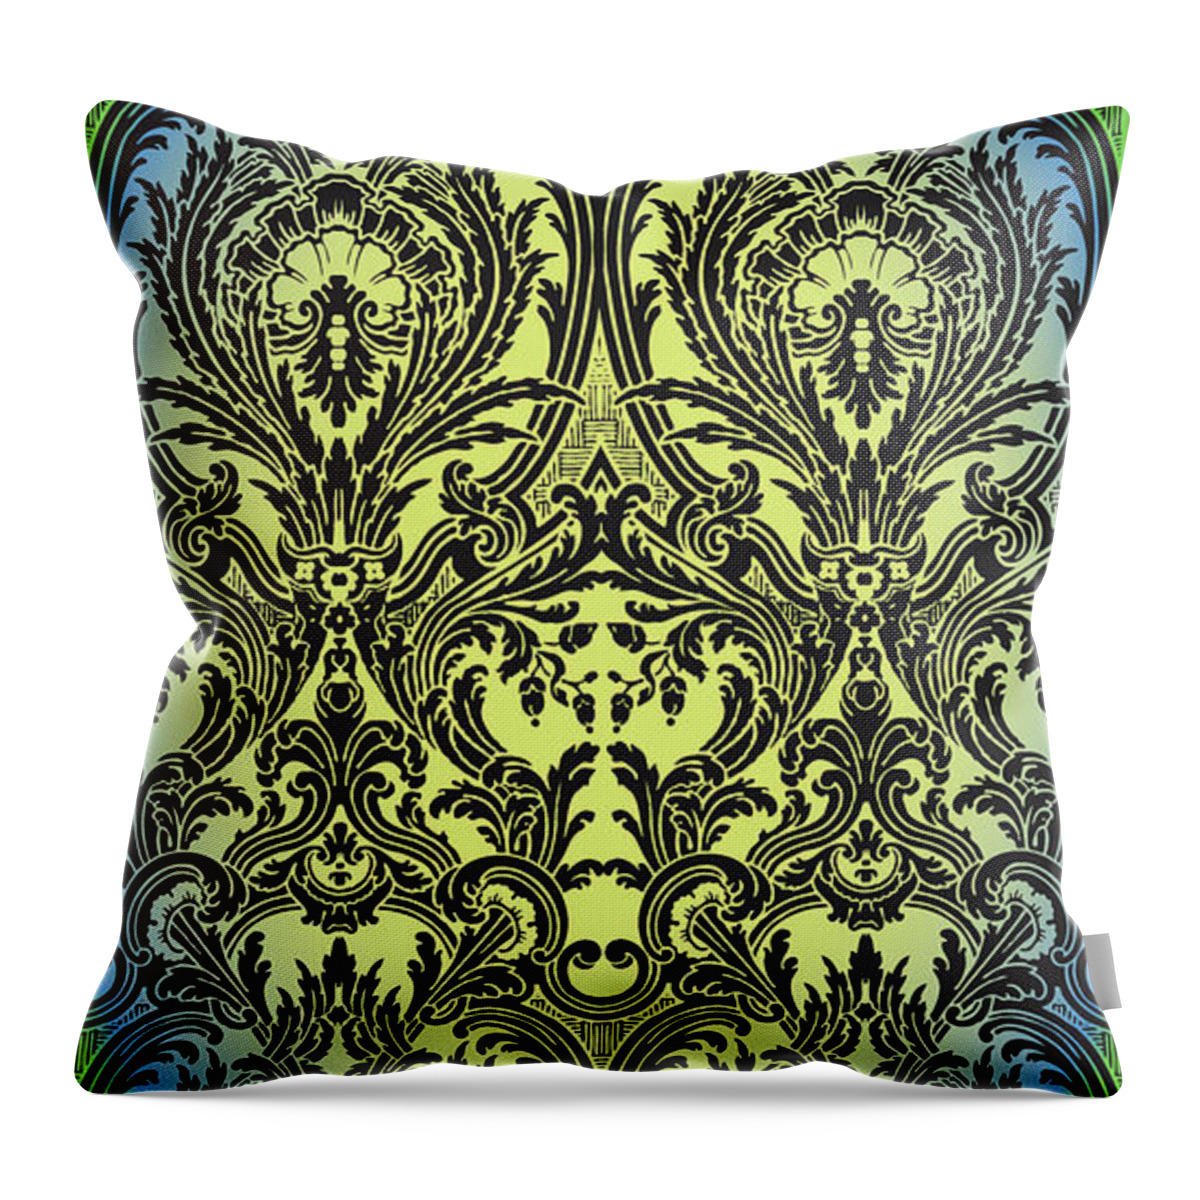 Pattern Throw Pillow featuring the digital art Geometric Pattern #4 by Ariadna De Raadt